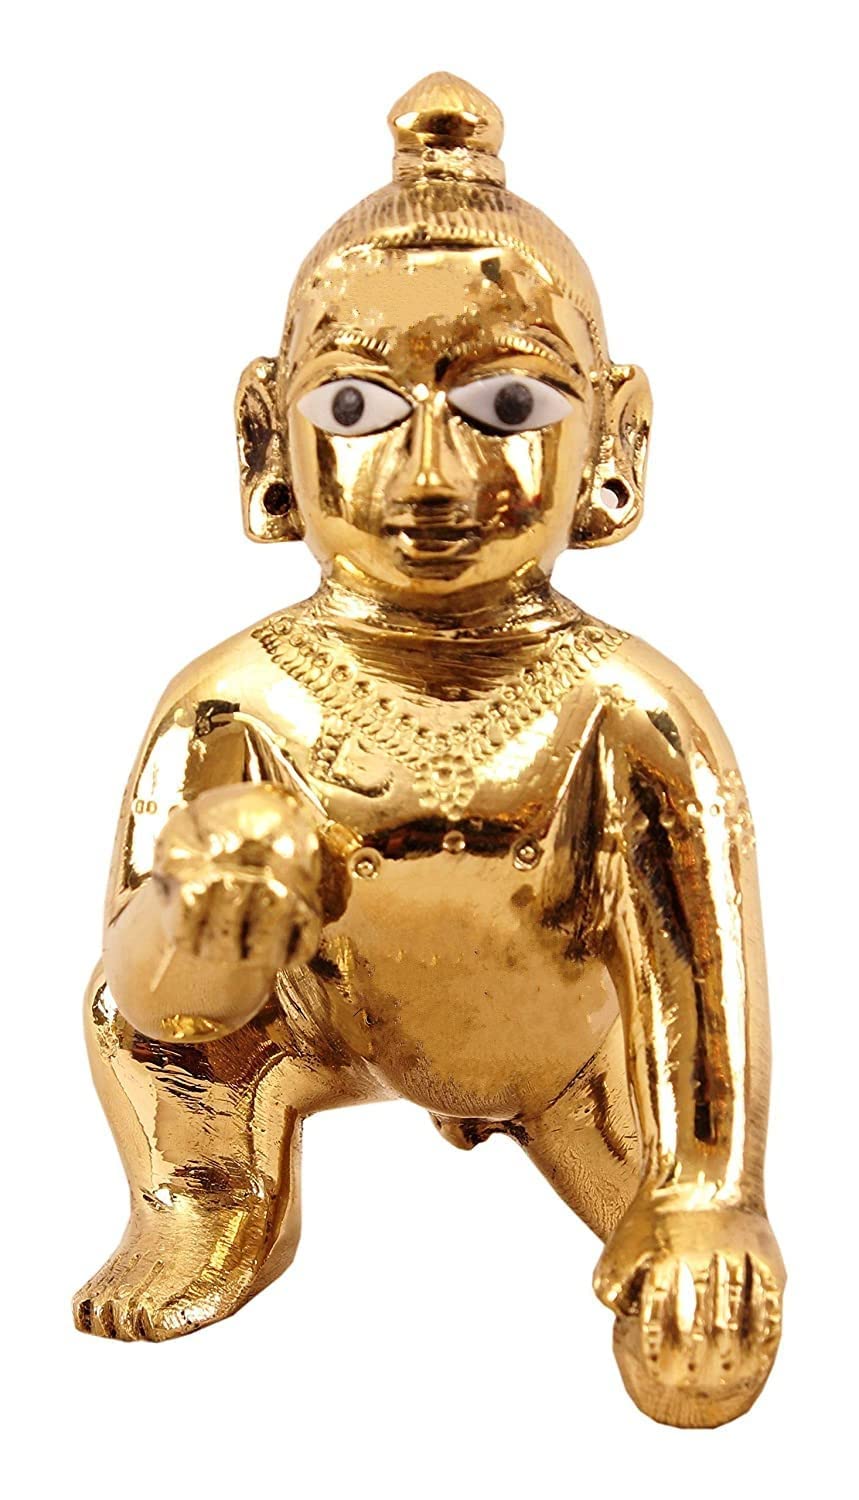 Pujahome Laddu Gopal Idol/Bal Gopal/Thakur Ji Metal Murti) Made in Vrindavan - Size 3